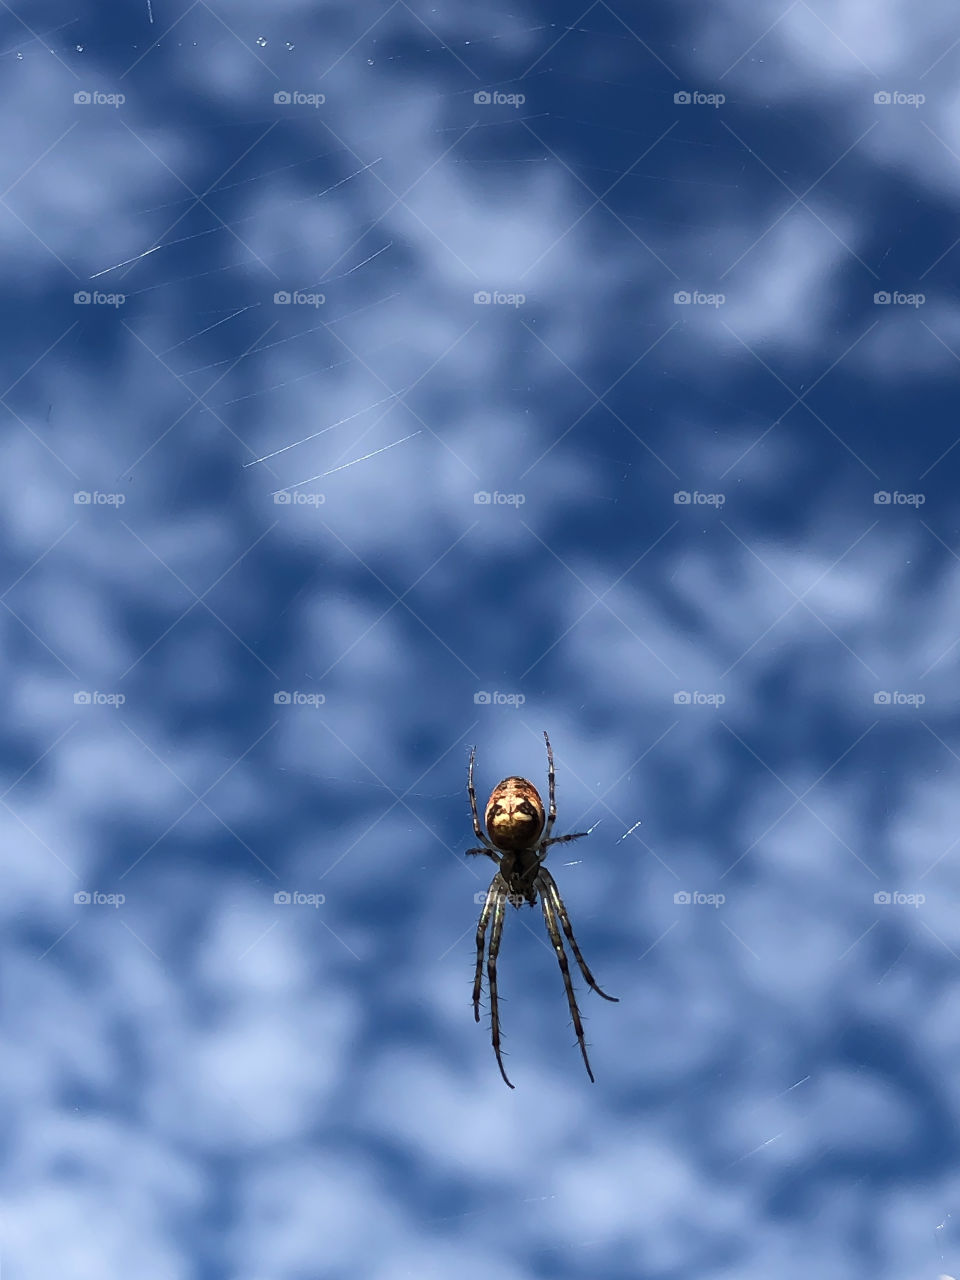 ingenious nature - spider lurks in invisible web